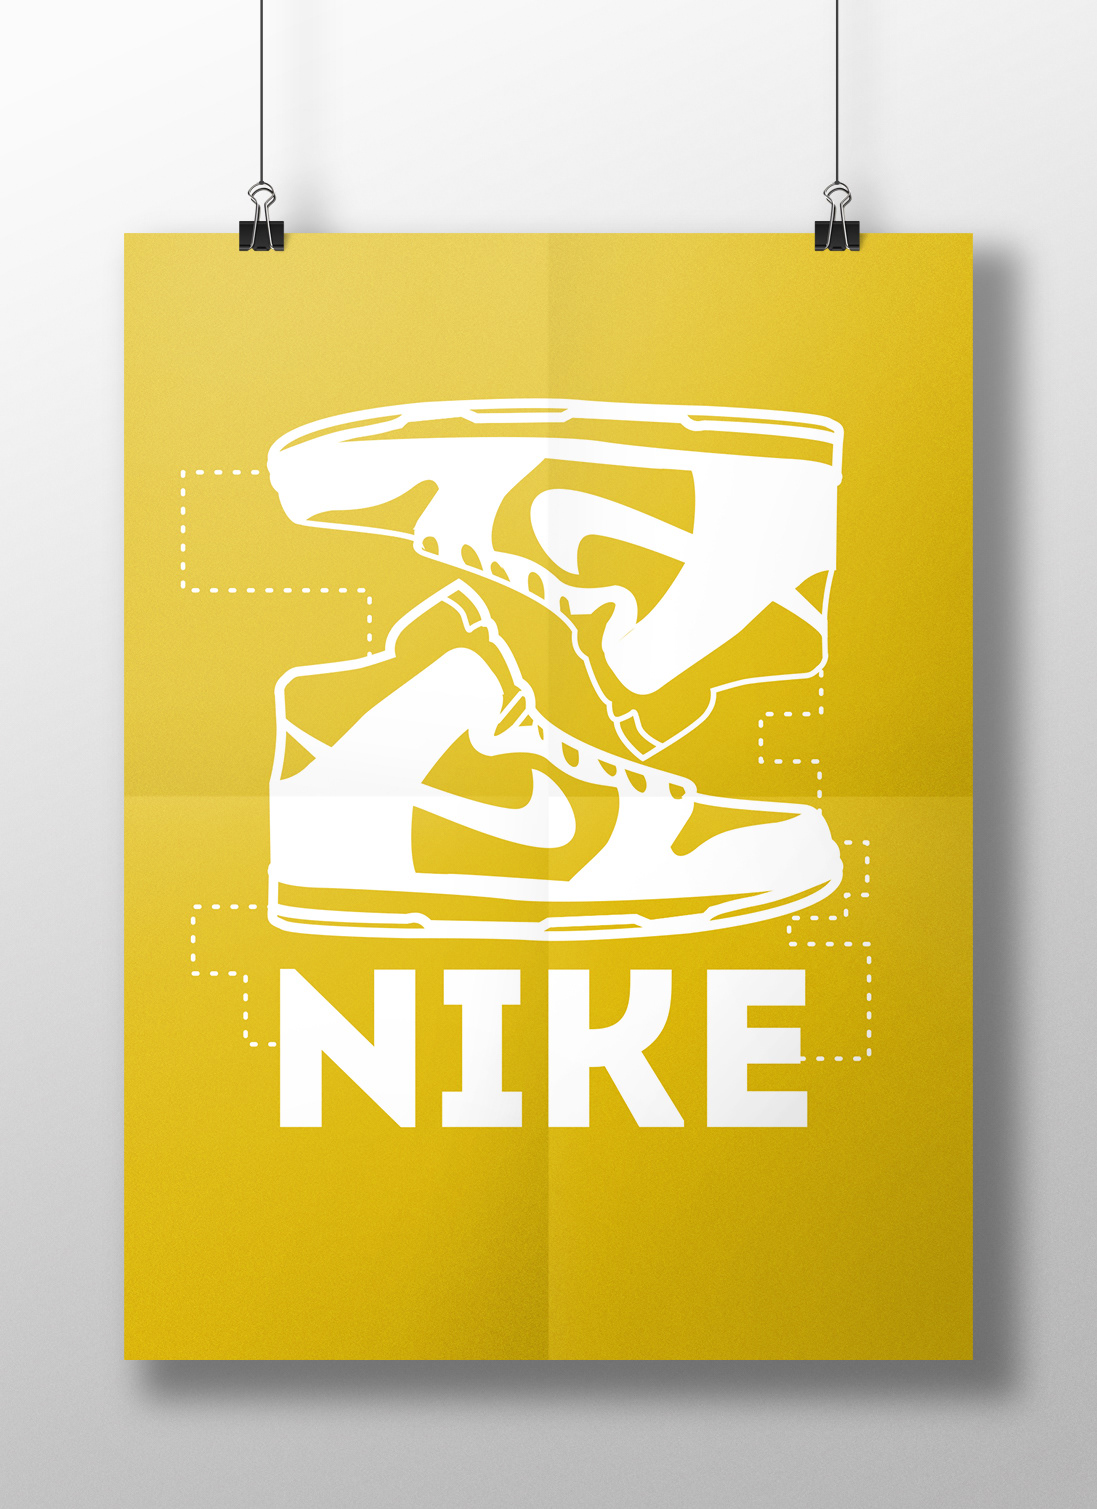 shoes icons poster basket ball Nike adidas Jordans sneakers Omokhare Iruoje